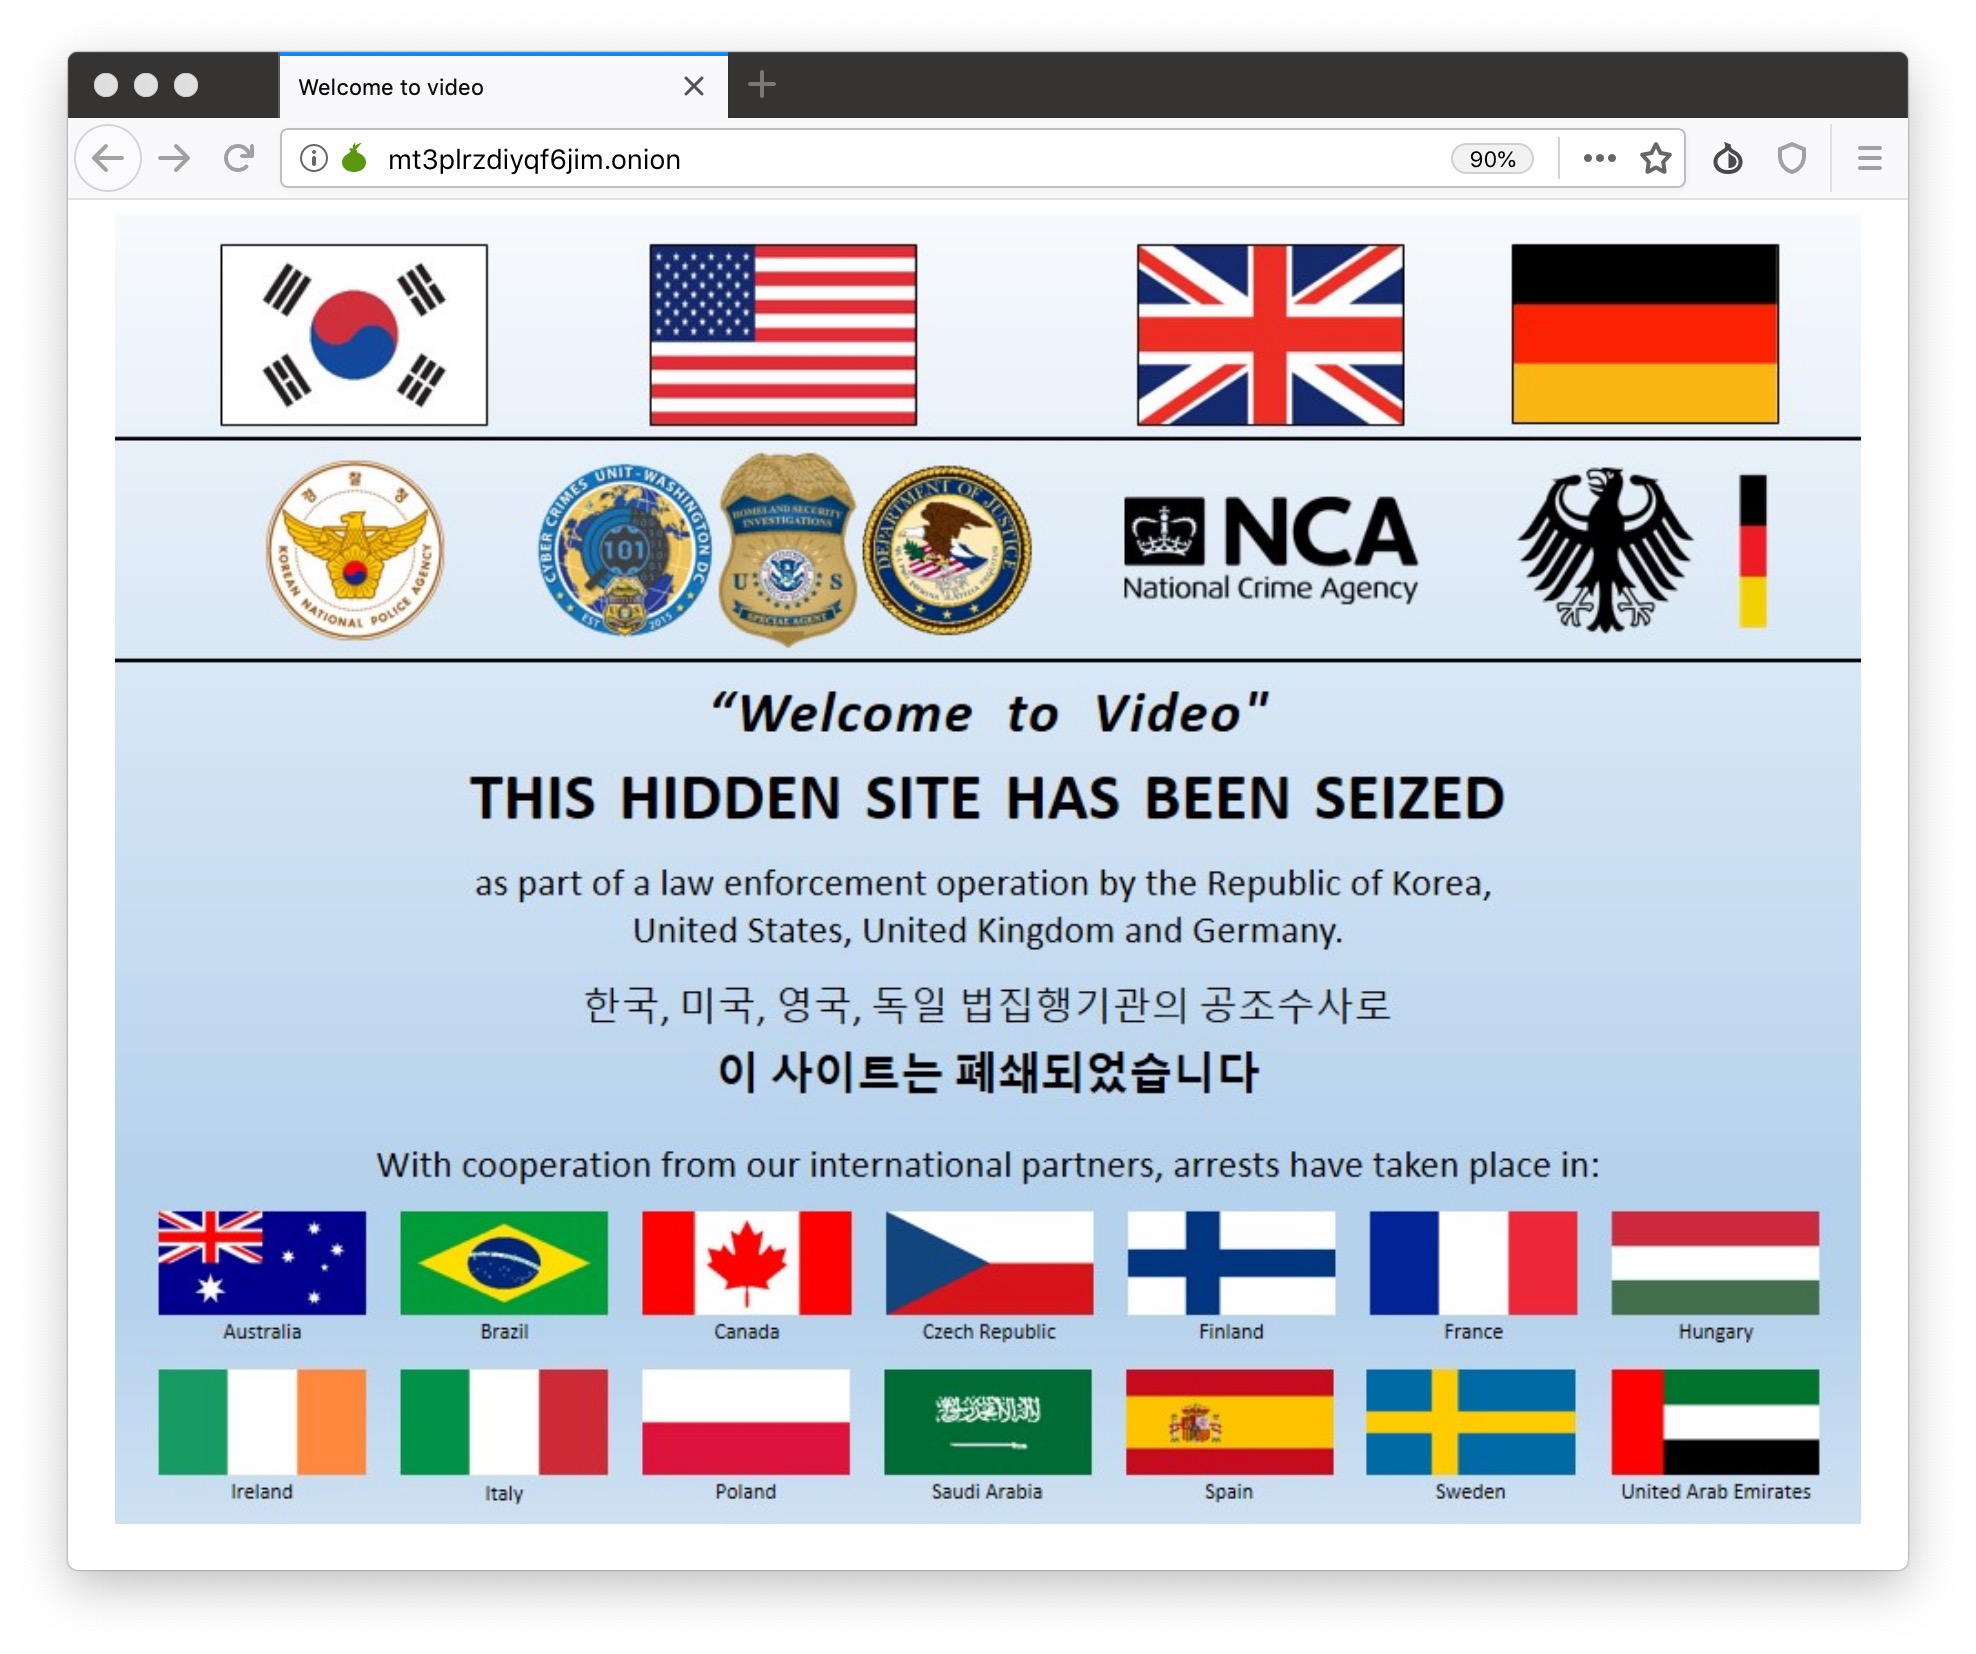 Darknet sites shut down mega тор браузер вся правда mega